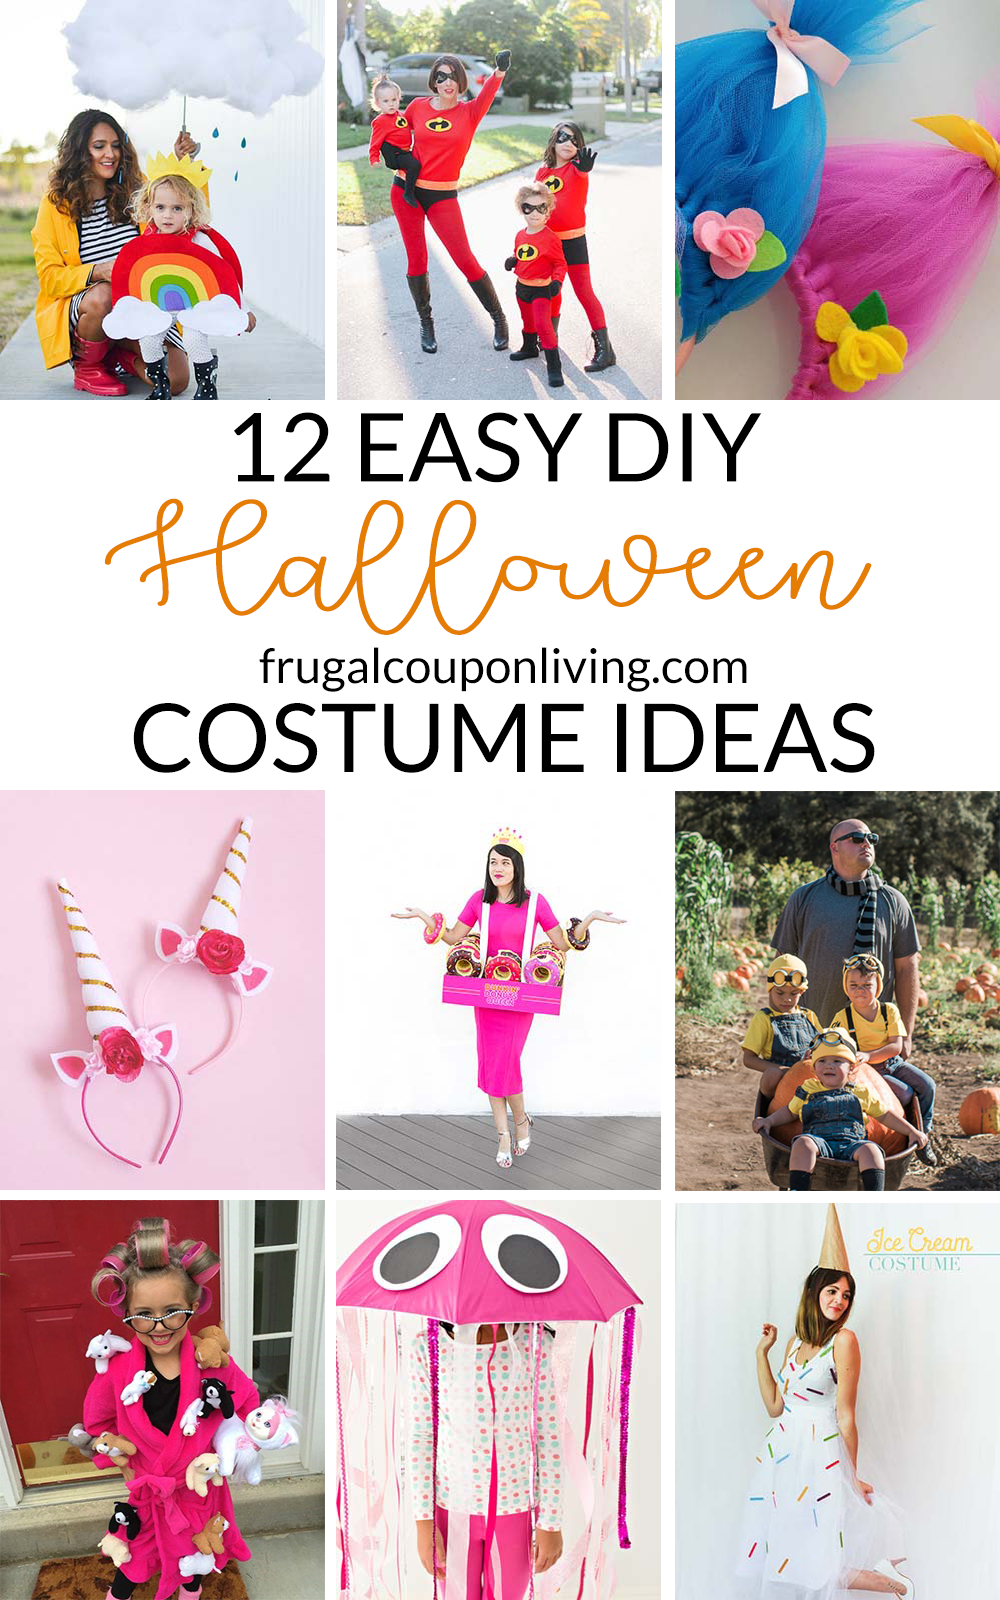 12 Easy  DIY  Halloween  Costume  Ideas  for Everyone